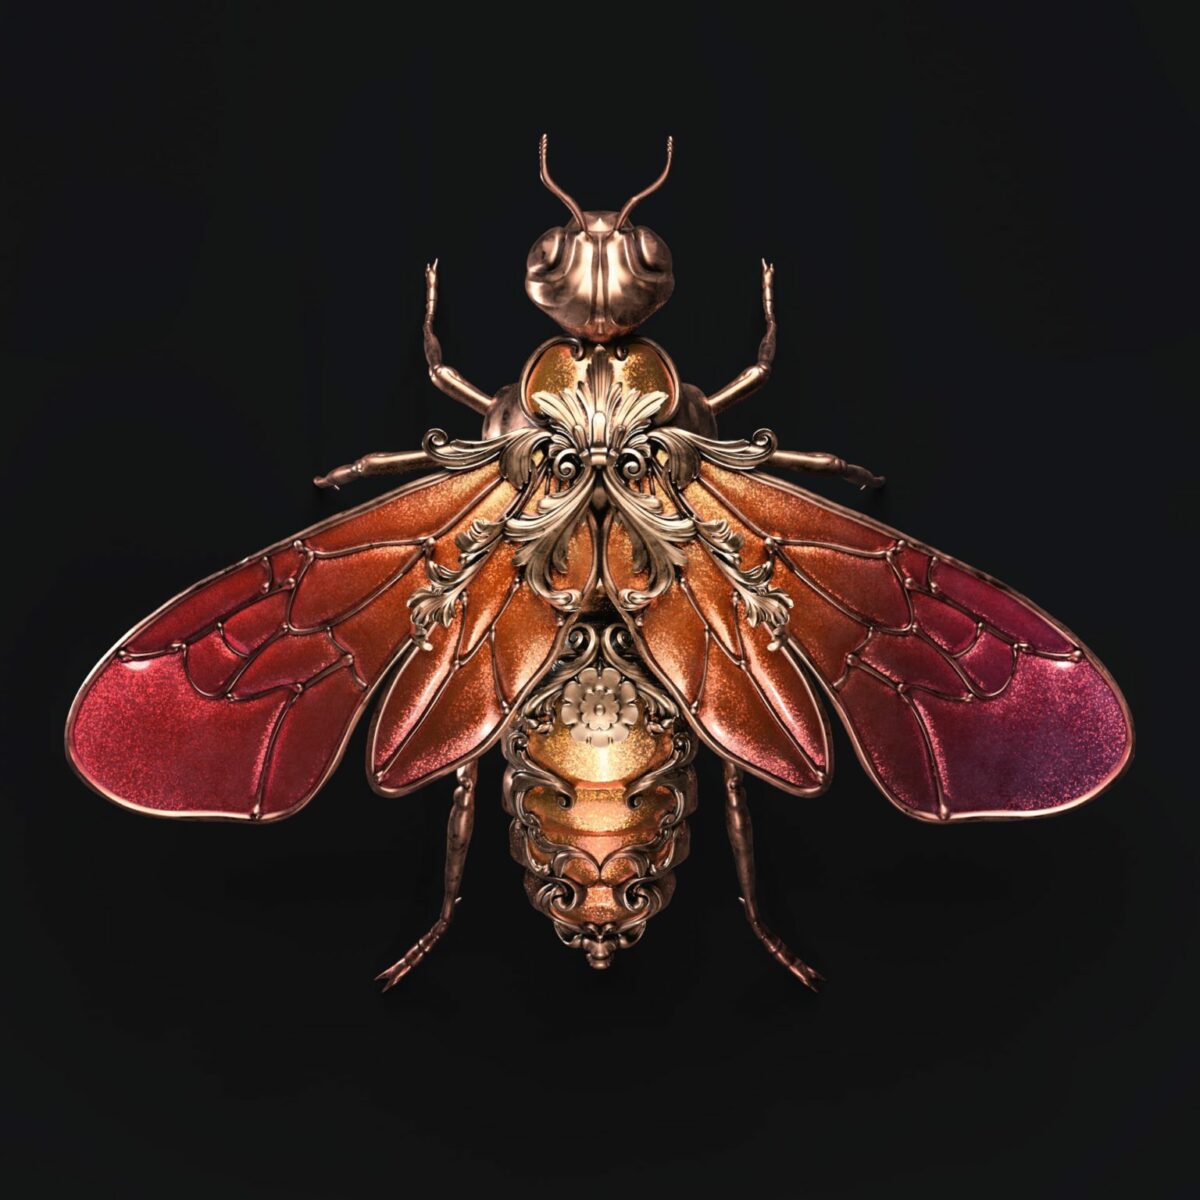 Jewel Insects Awesome Hyper Realistic Digital Jewelry By Sasha Vinogradova (6)